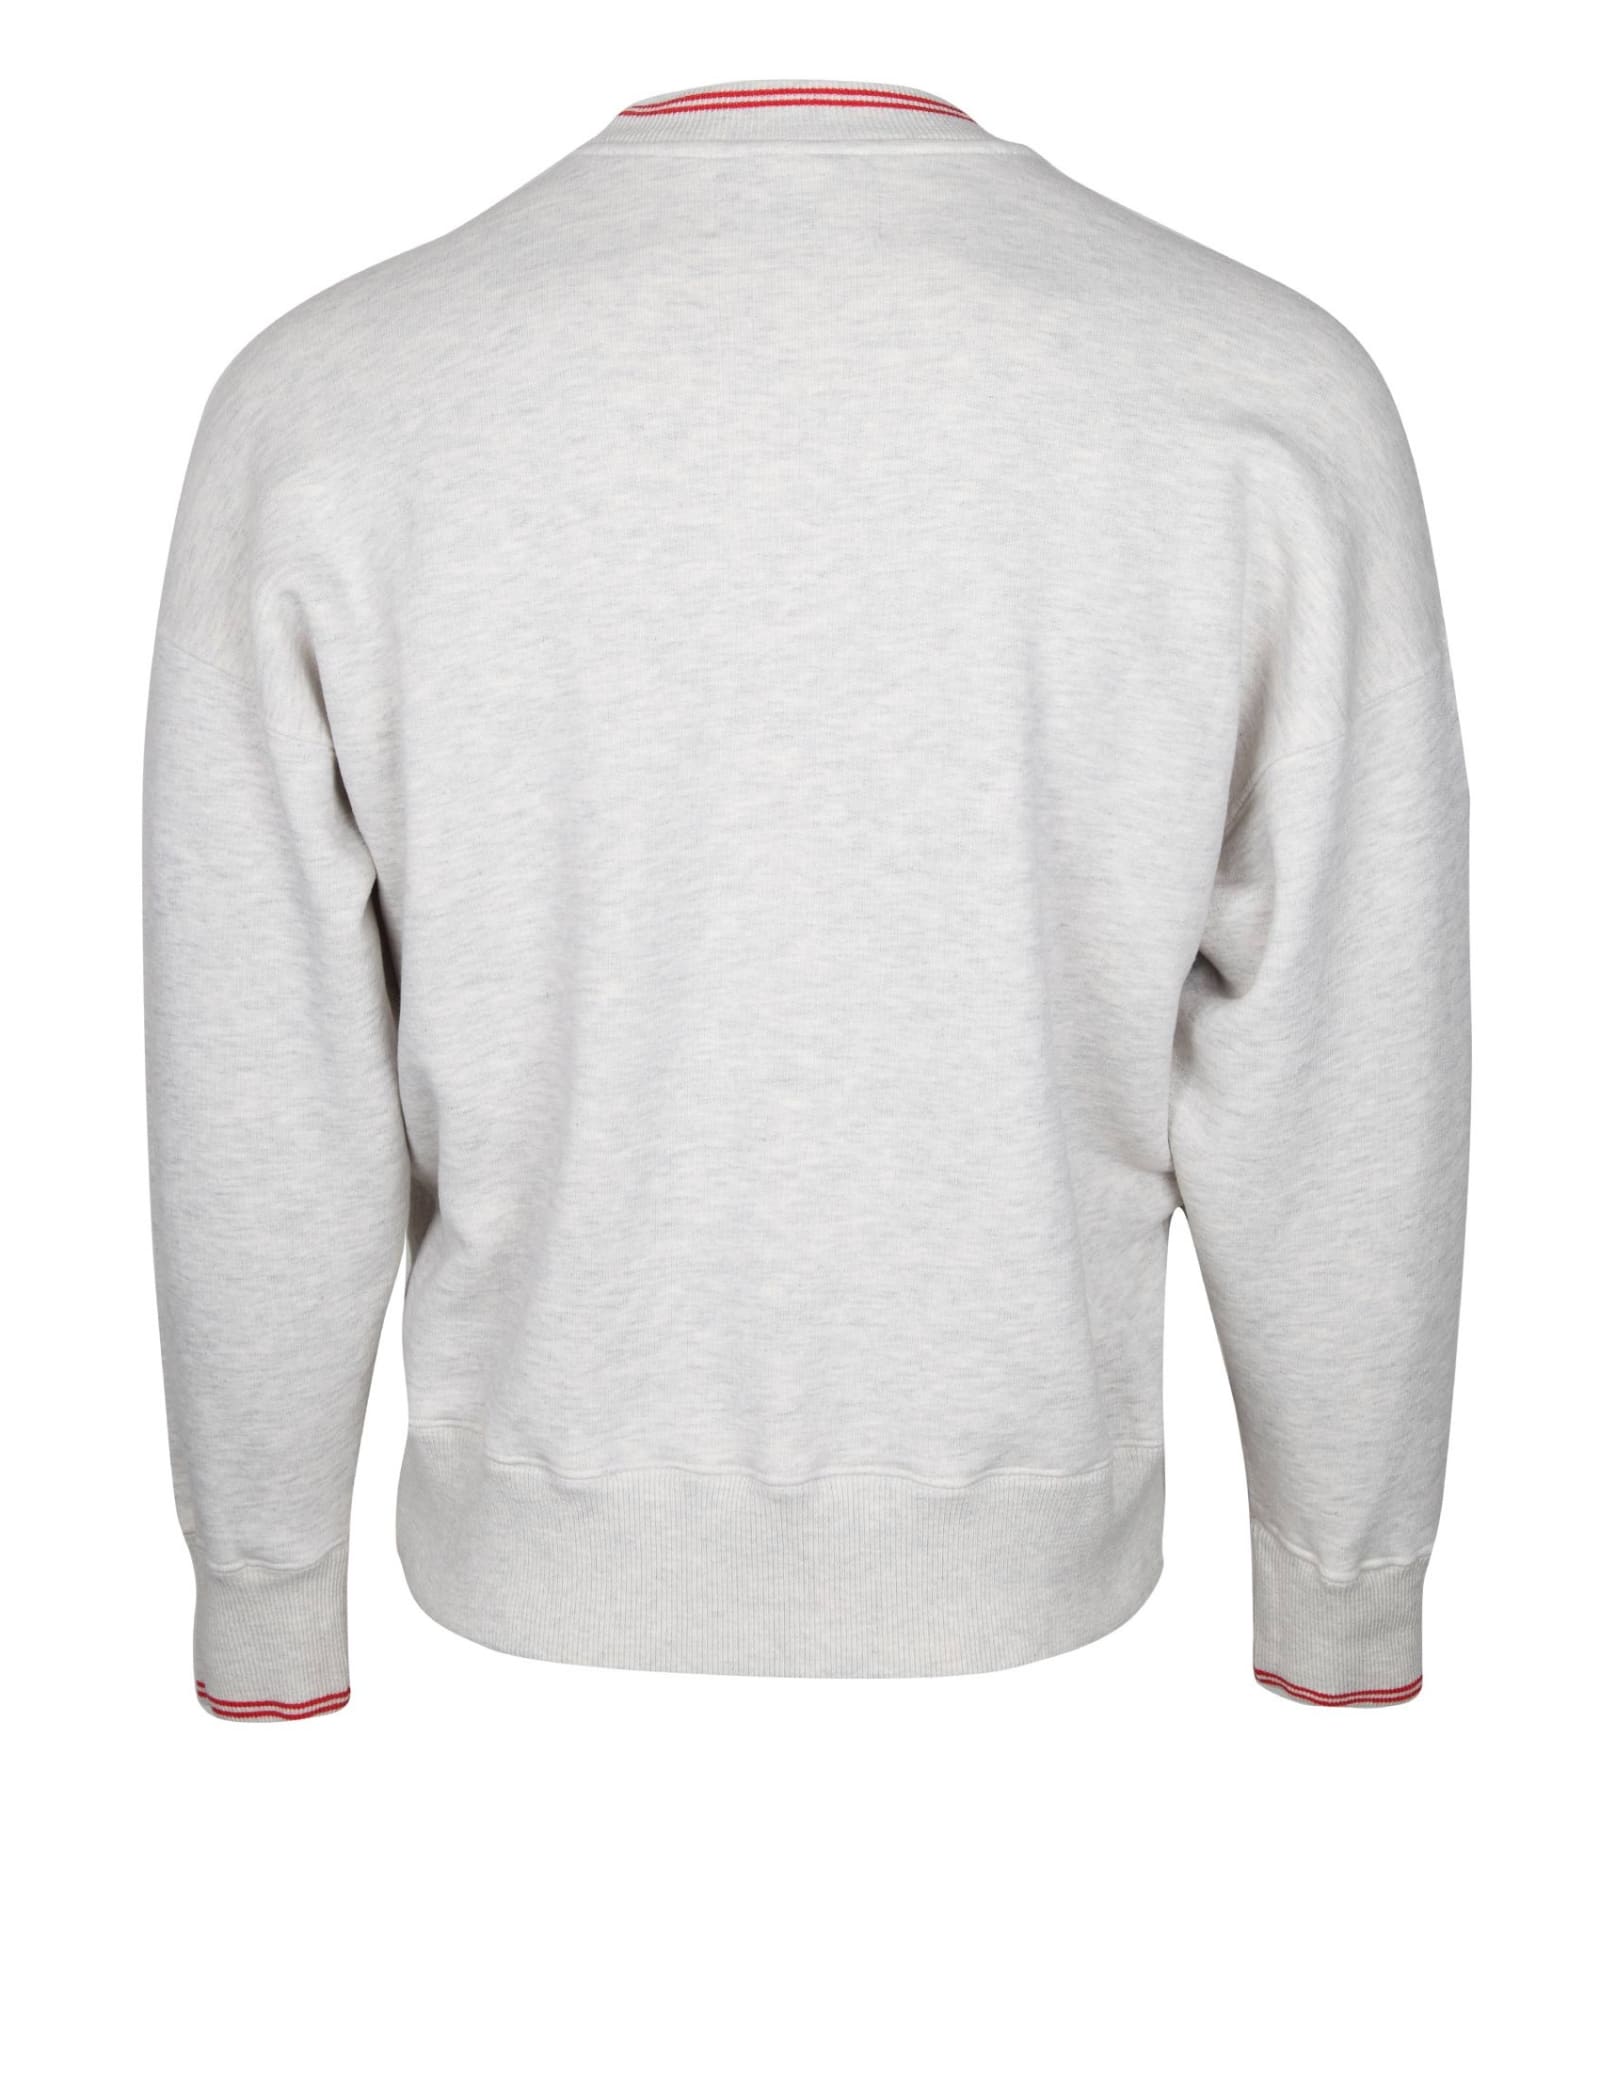 Shop Autry Cotton Sweatshirt With Logo In Melange